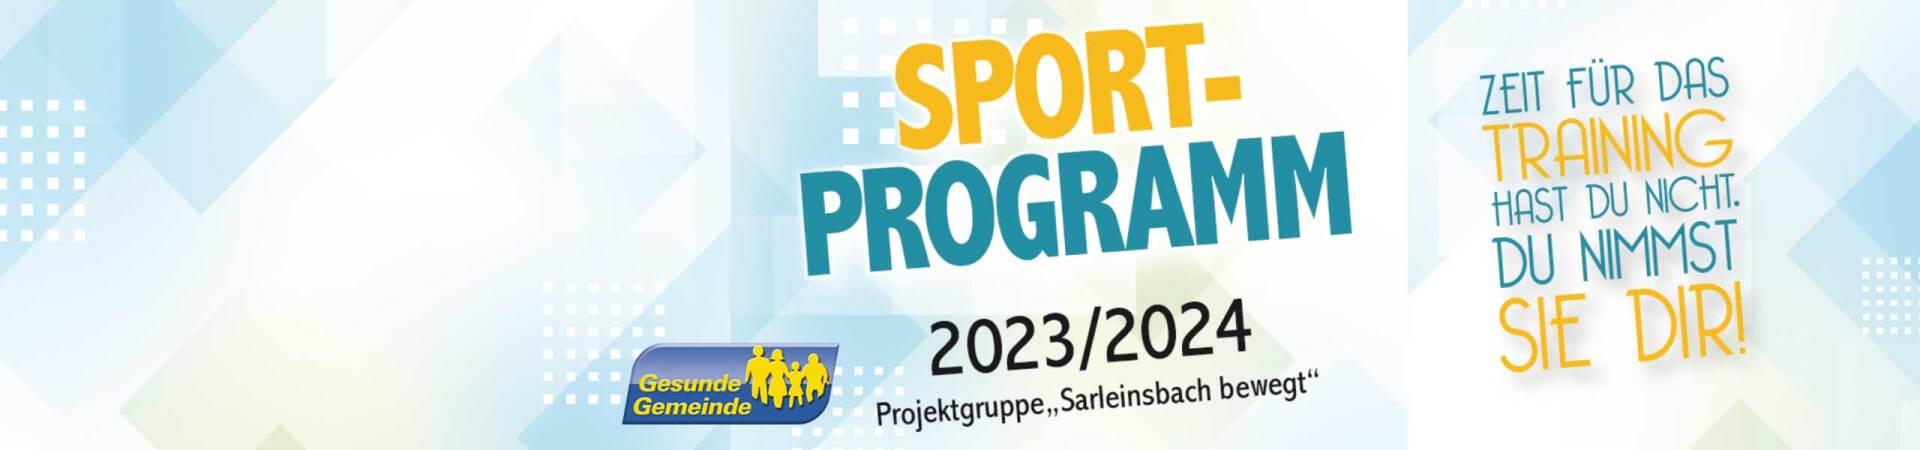 Sportfolder 2023/24